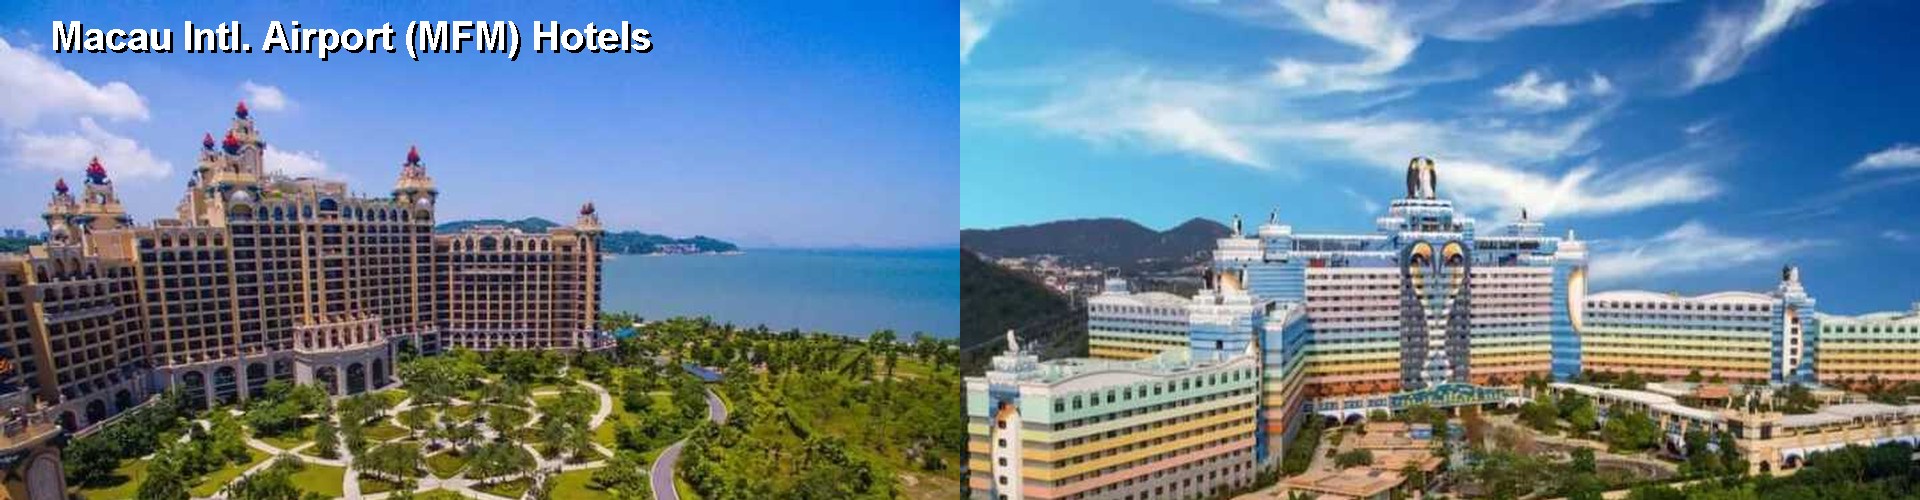 5 Best Hotels near Macau Intl. Airport (MFM)